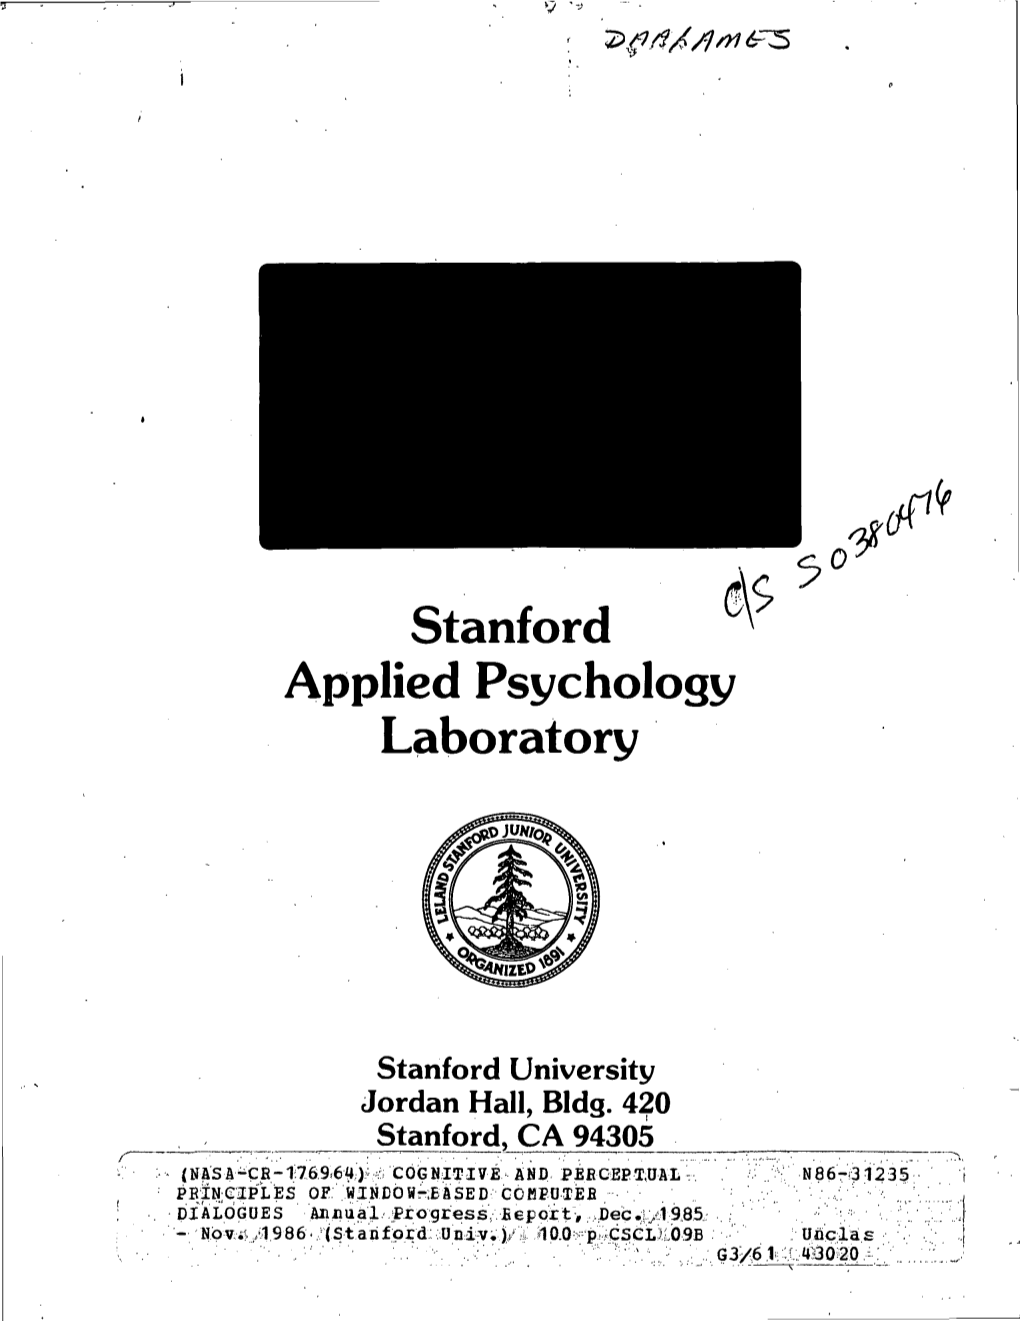 Stanford Applied Psychology Laboratory